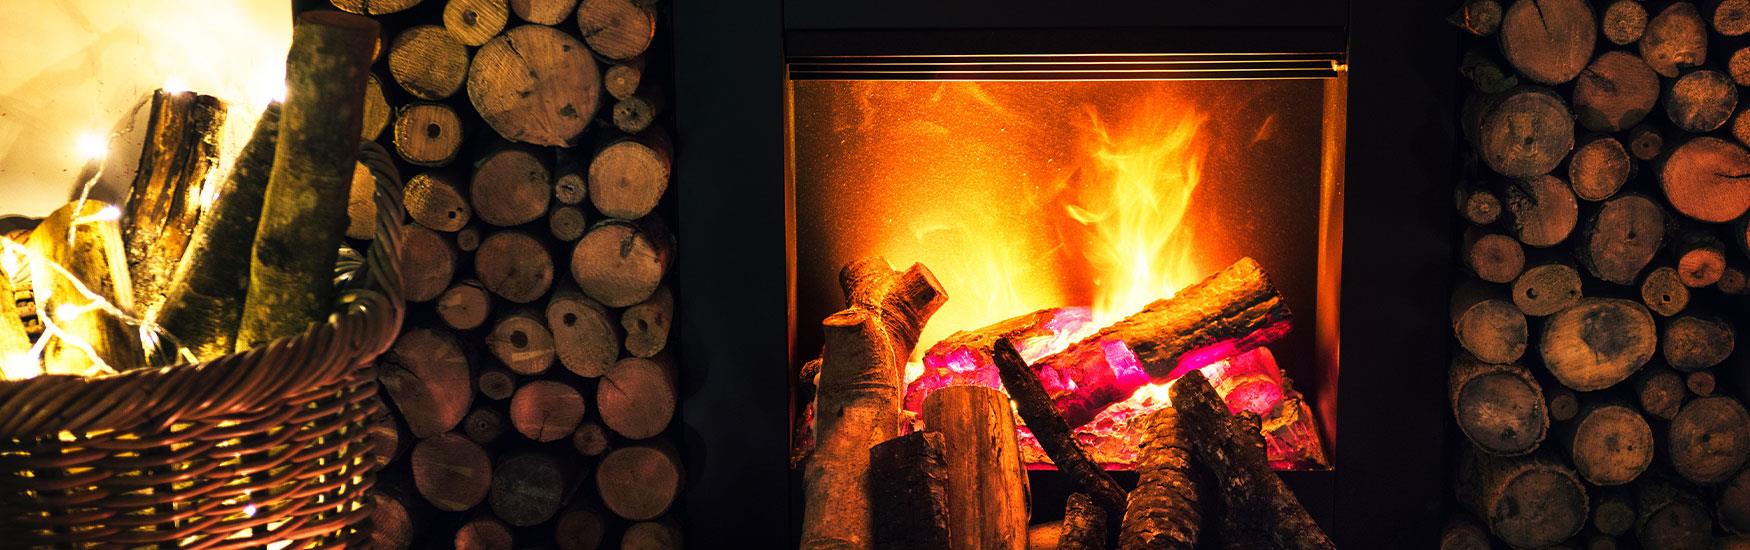 Generic winter shot of a warm yet festive fireplace glowing orange with logs surrounding it